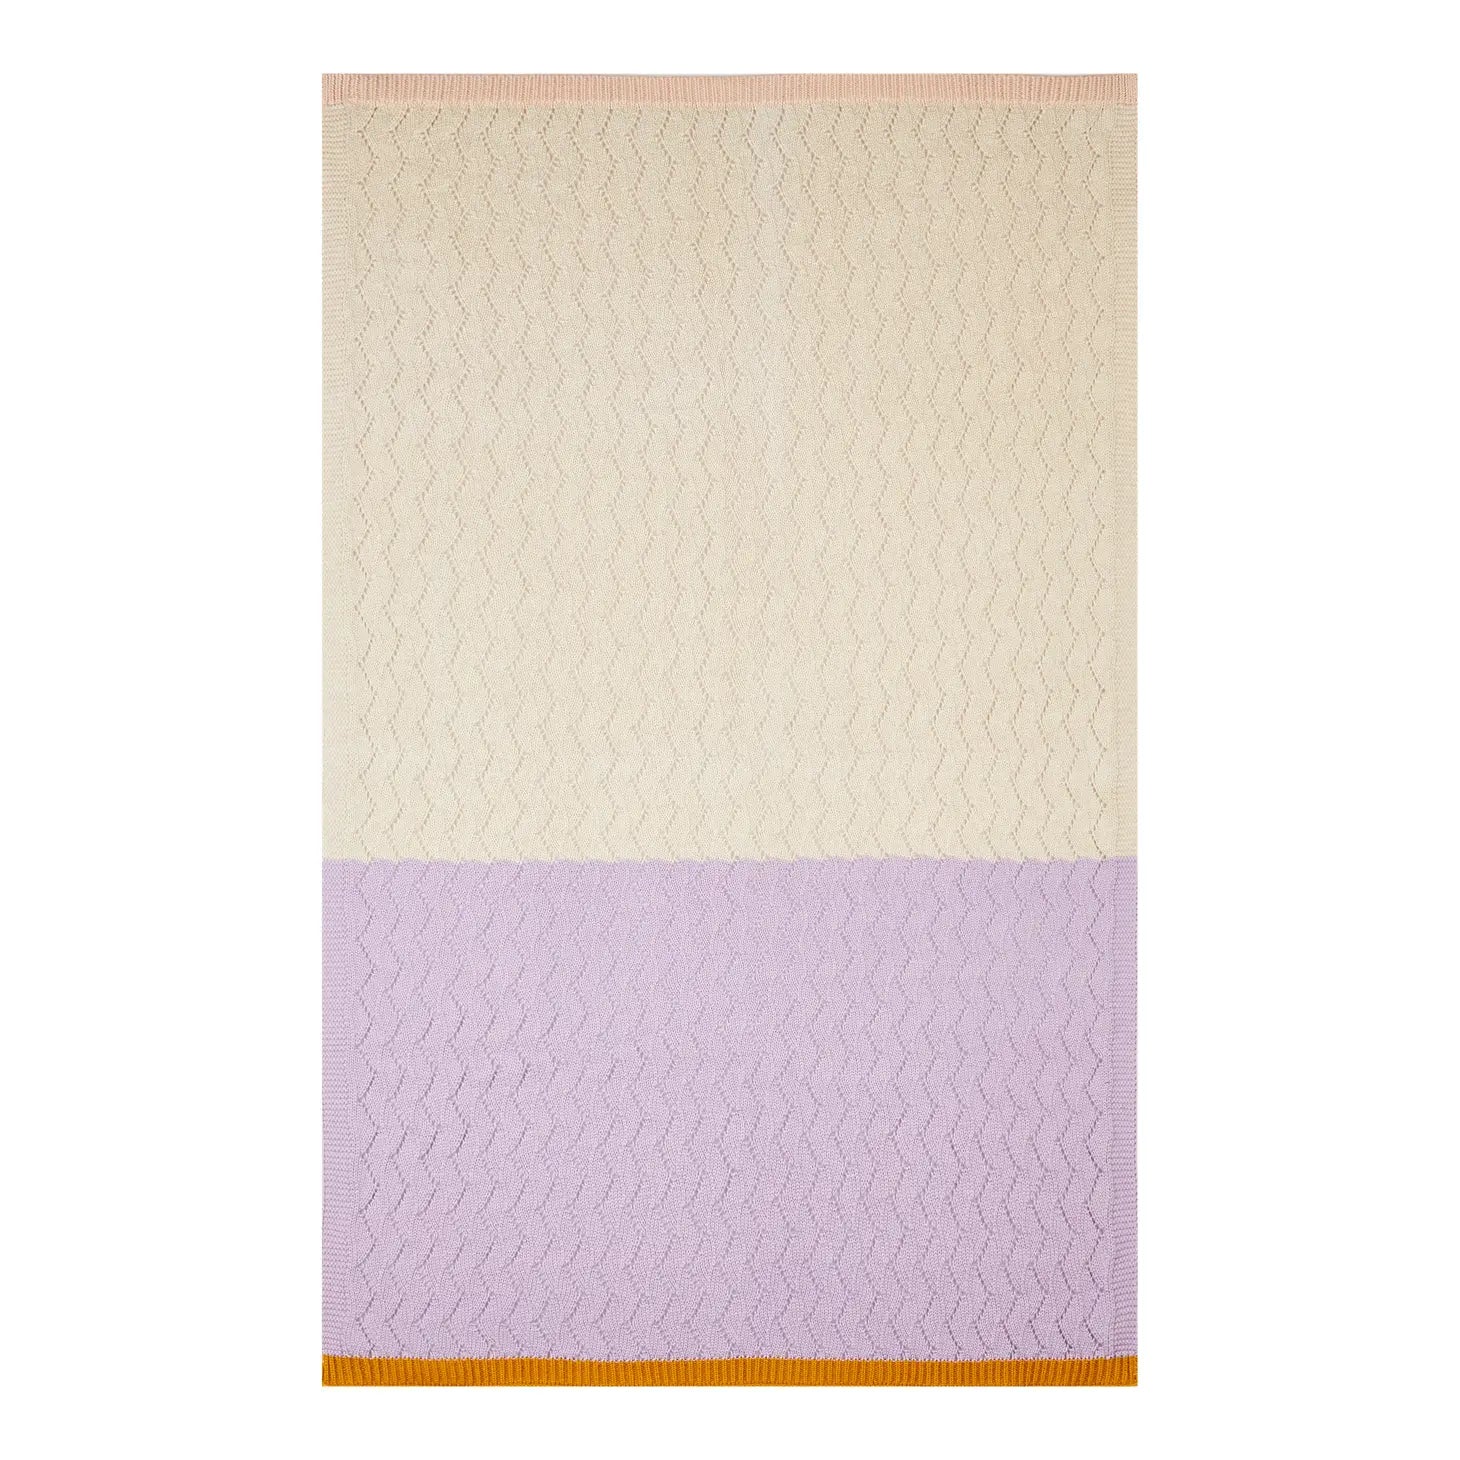 Textured Zigzag Knit Cotton Baby Blanket - Lilac & Cream